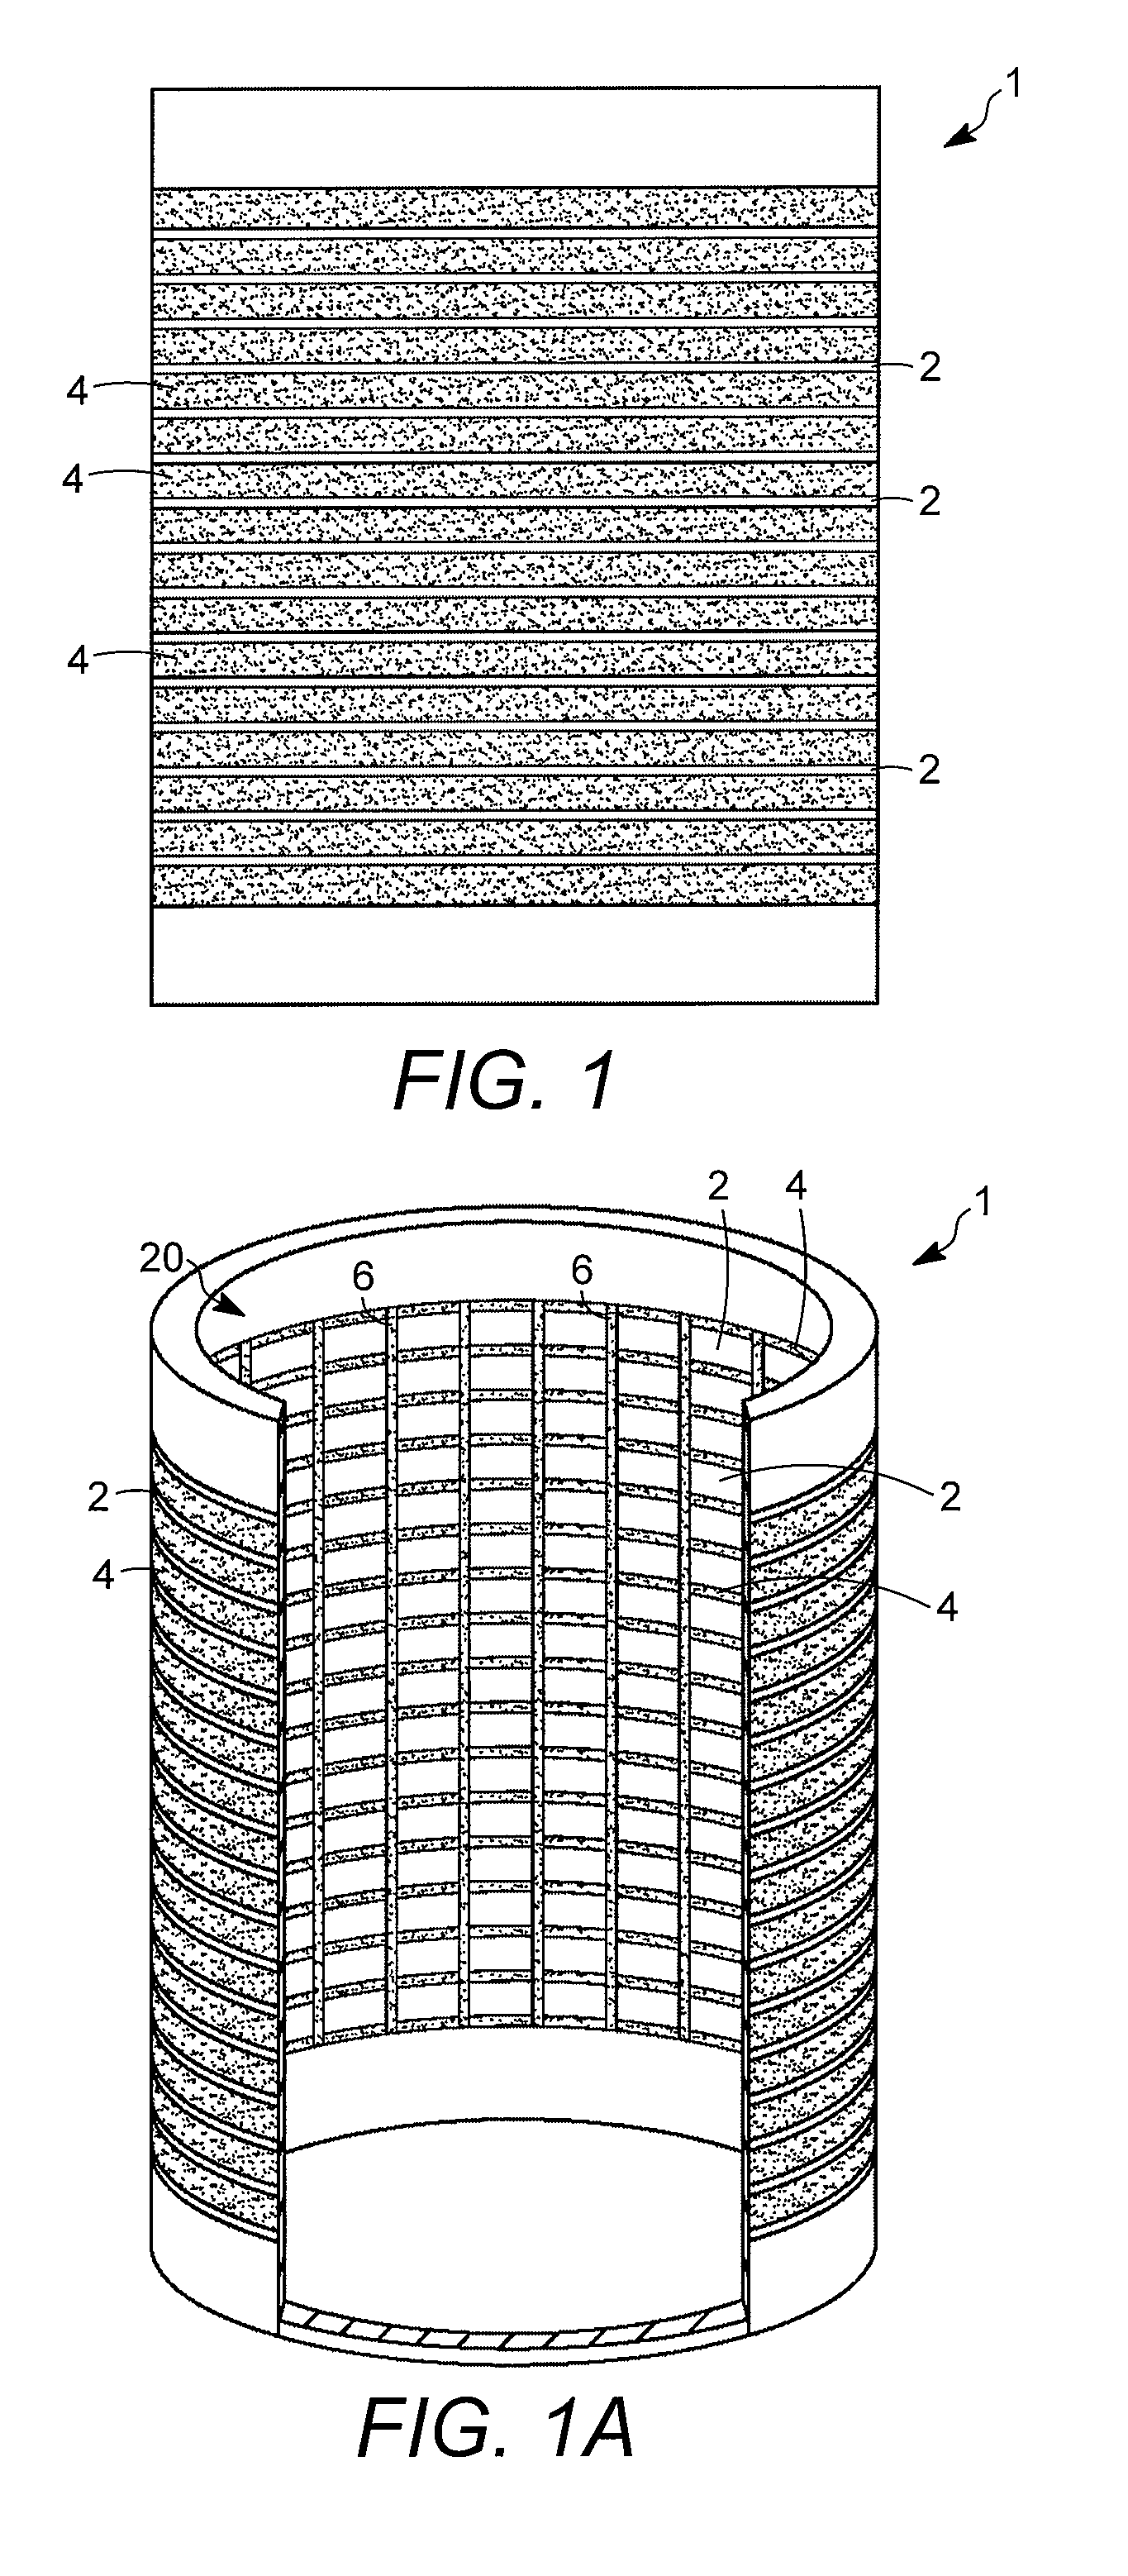 Fluid distribution in radial flow reactors including moving bed reactors